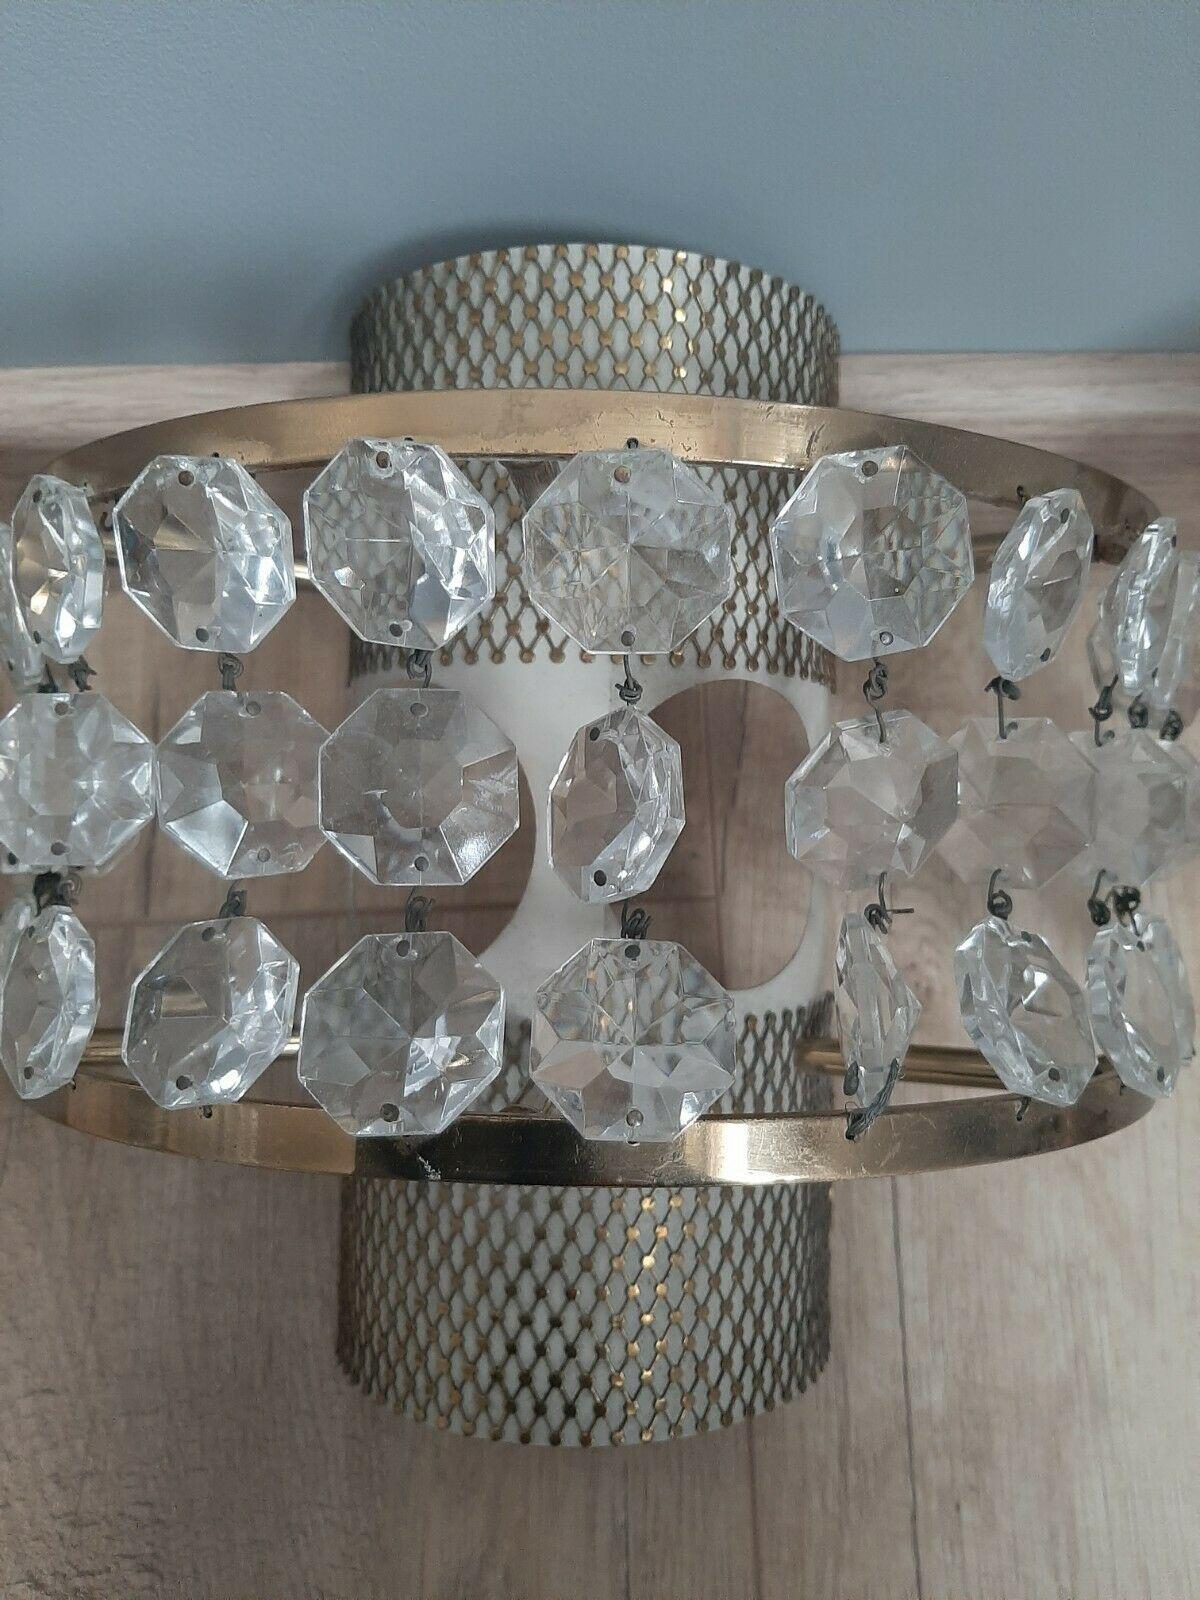 Set 3 Italian Modernist Brass Patterned w/Glass Bruno GattaStilnovo Wall Sconces For Sale 5